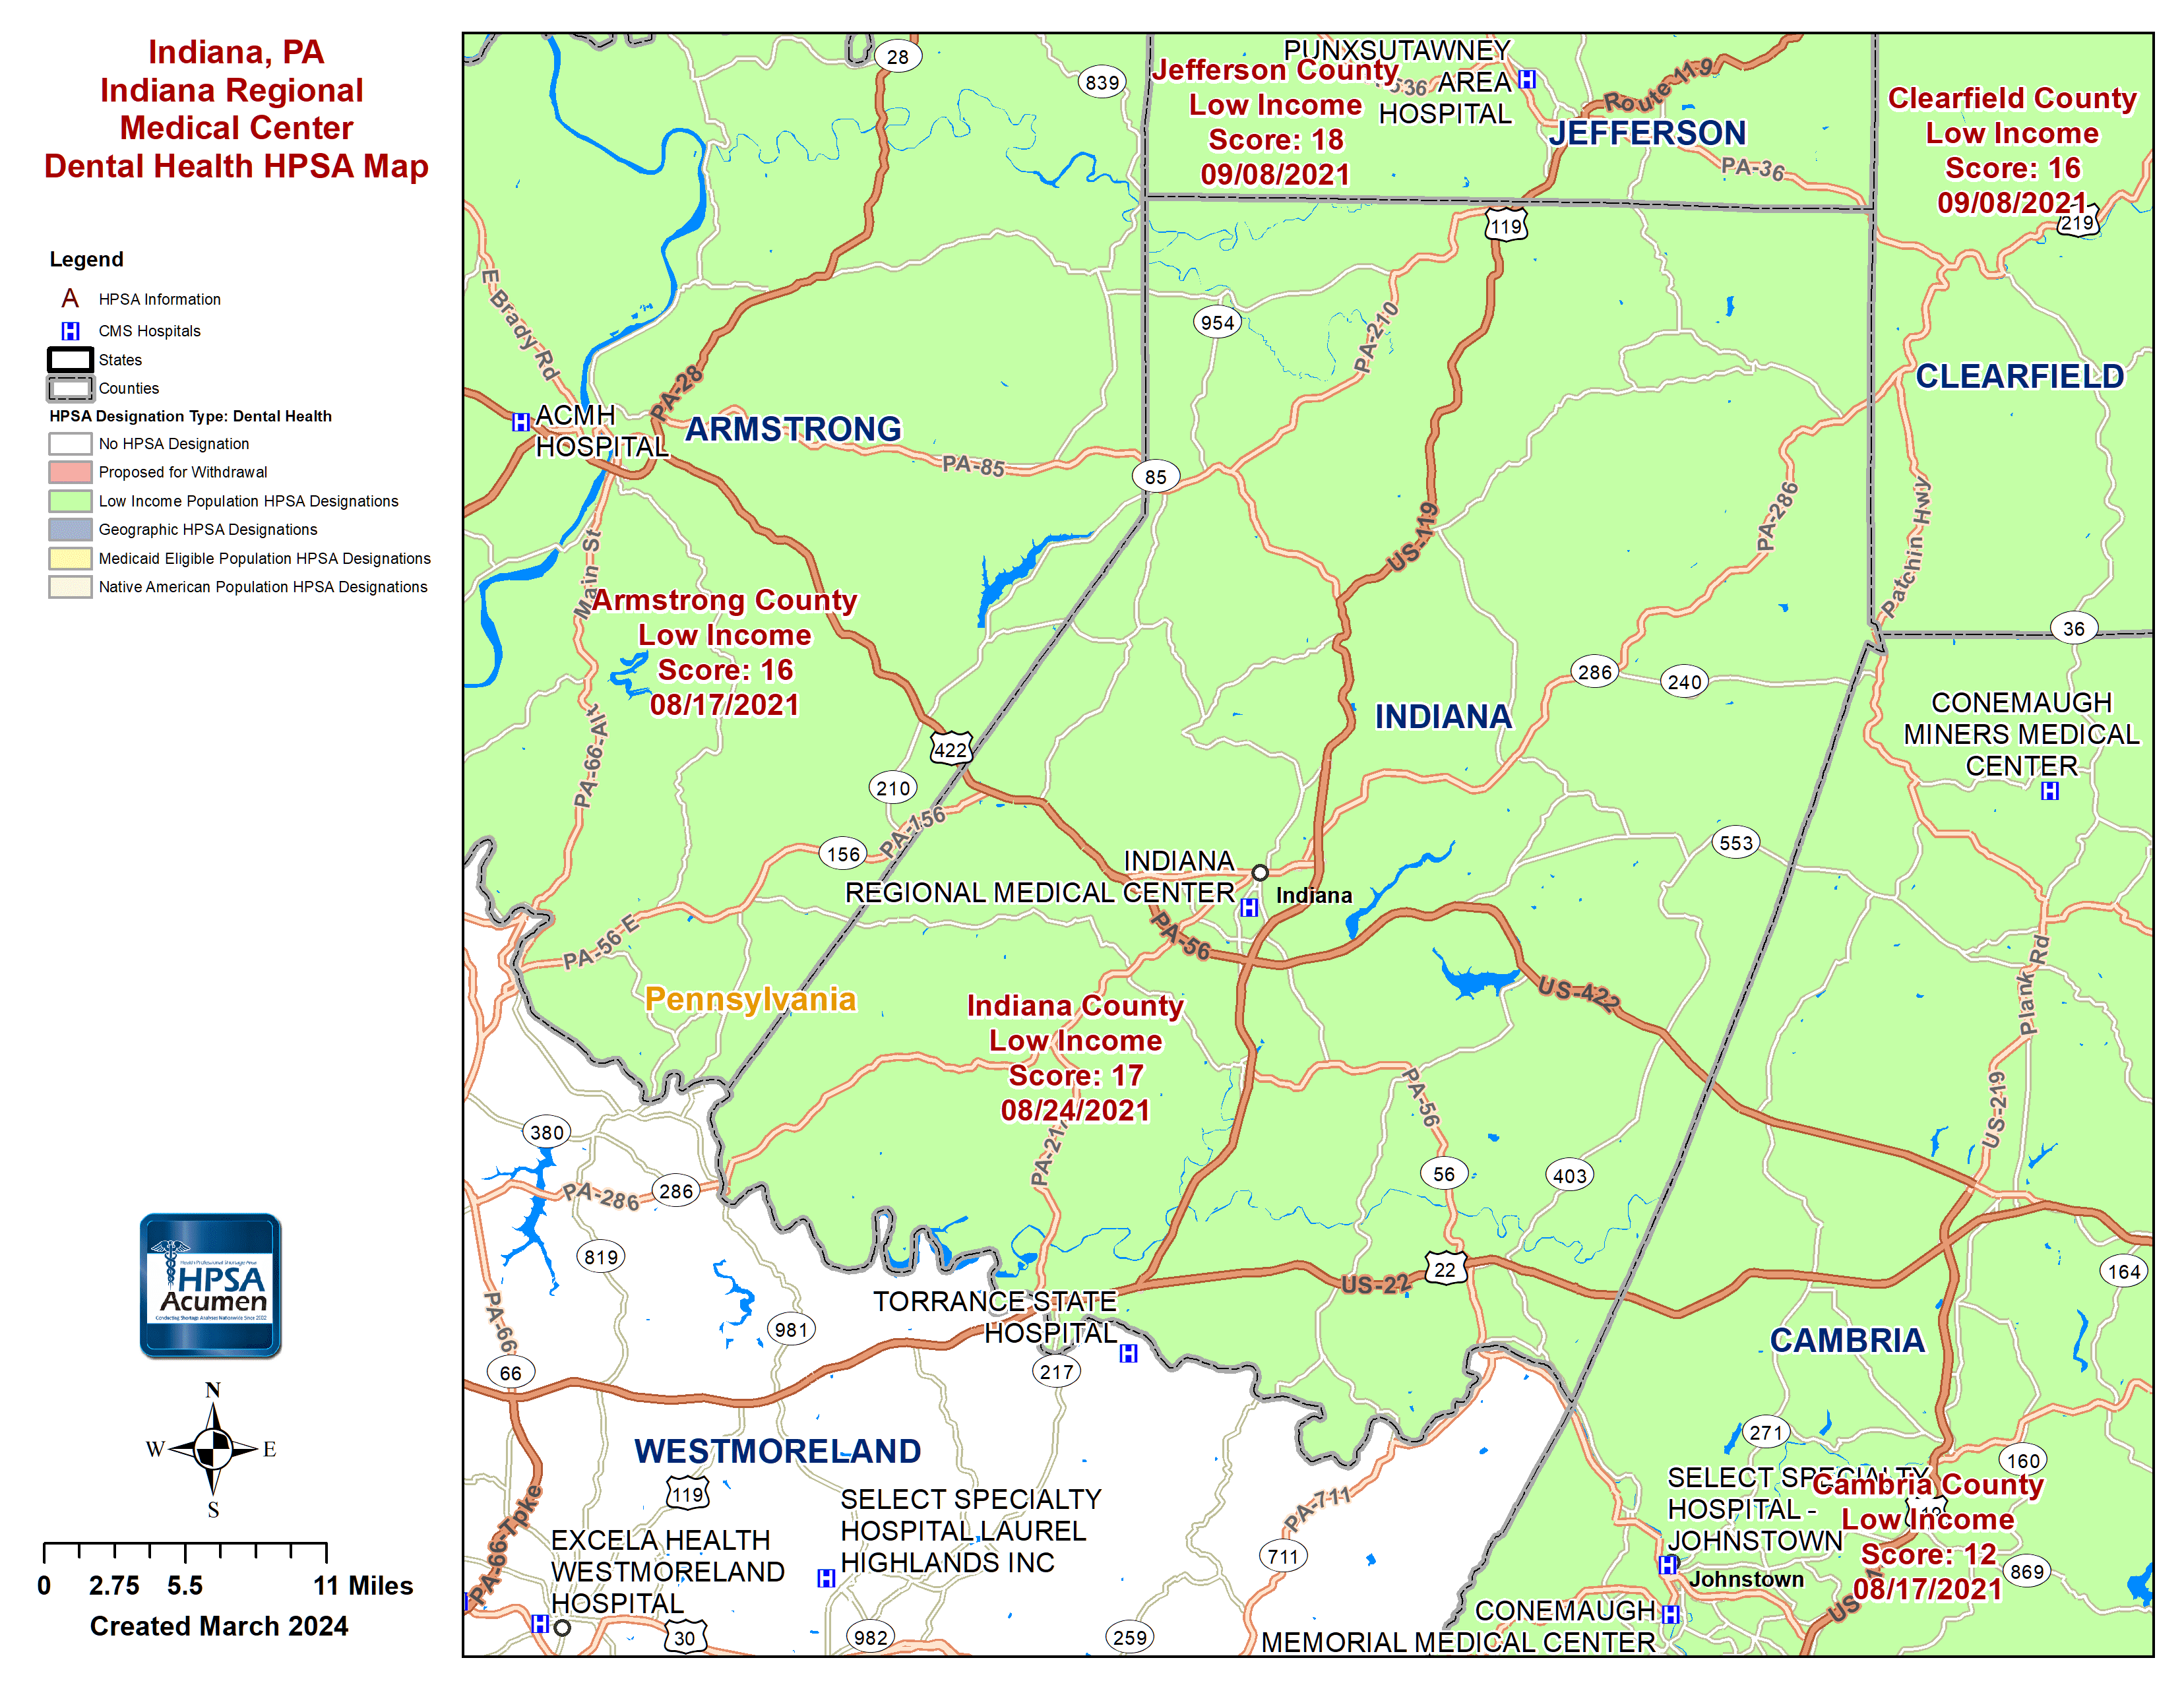 Indiana, PA DH HPSA Map